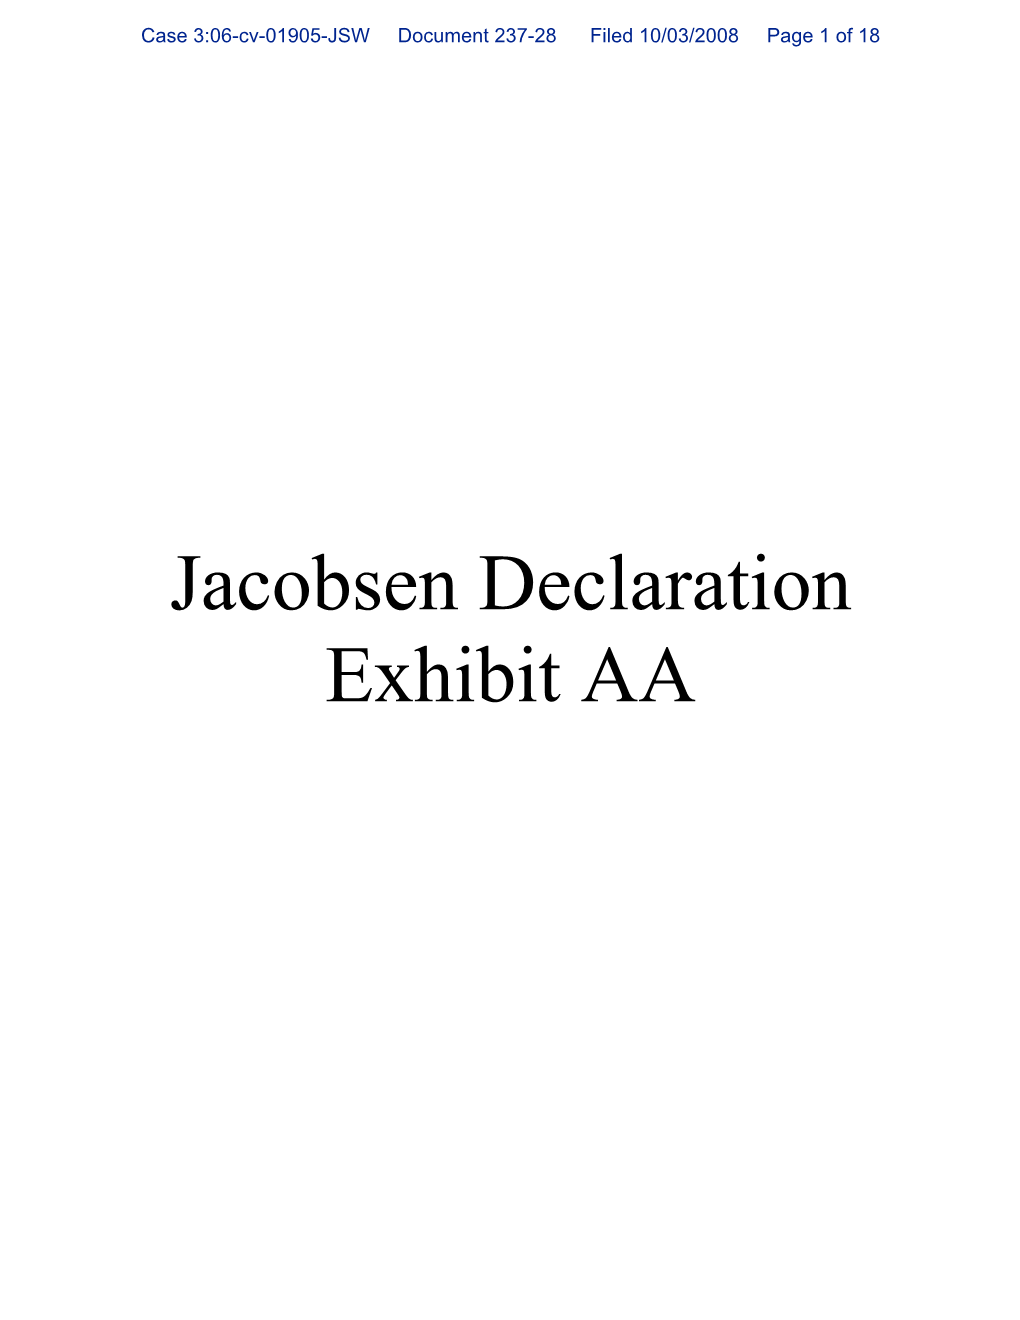 Jacobsen Declaration Exhibit AA Case 3:06-Cv-01905-JSW Document 237-28 Filed 10/03/2008 Page 2 of 18